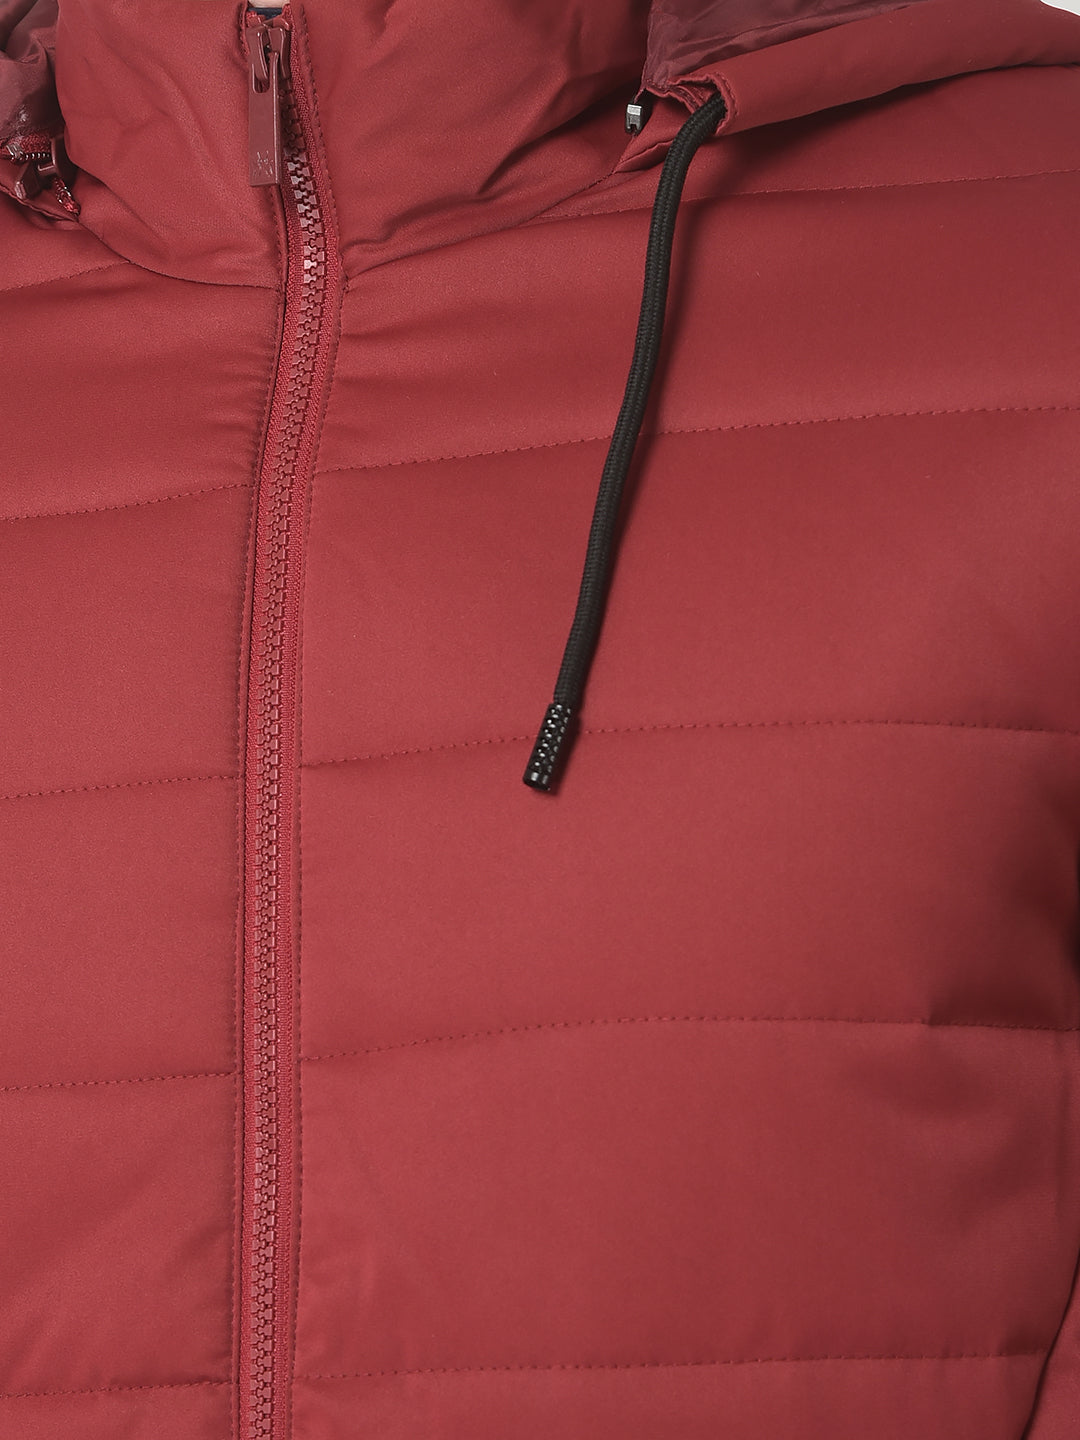  Red Detachable-Hood Jacket